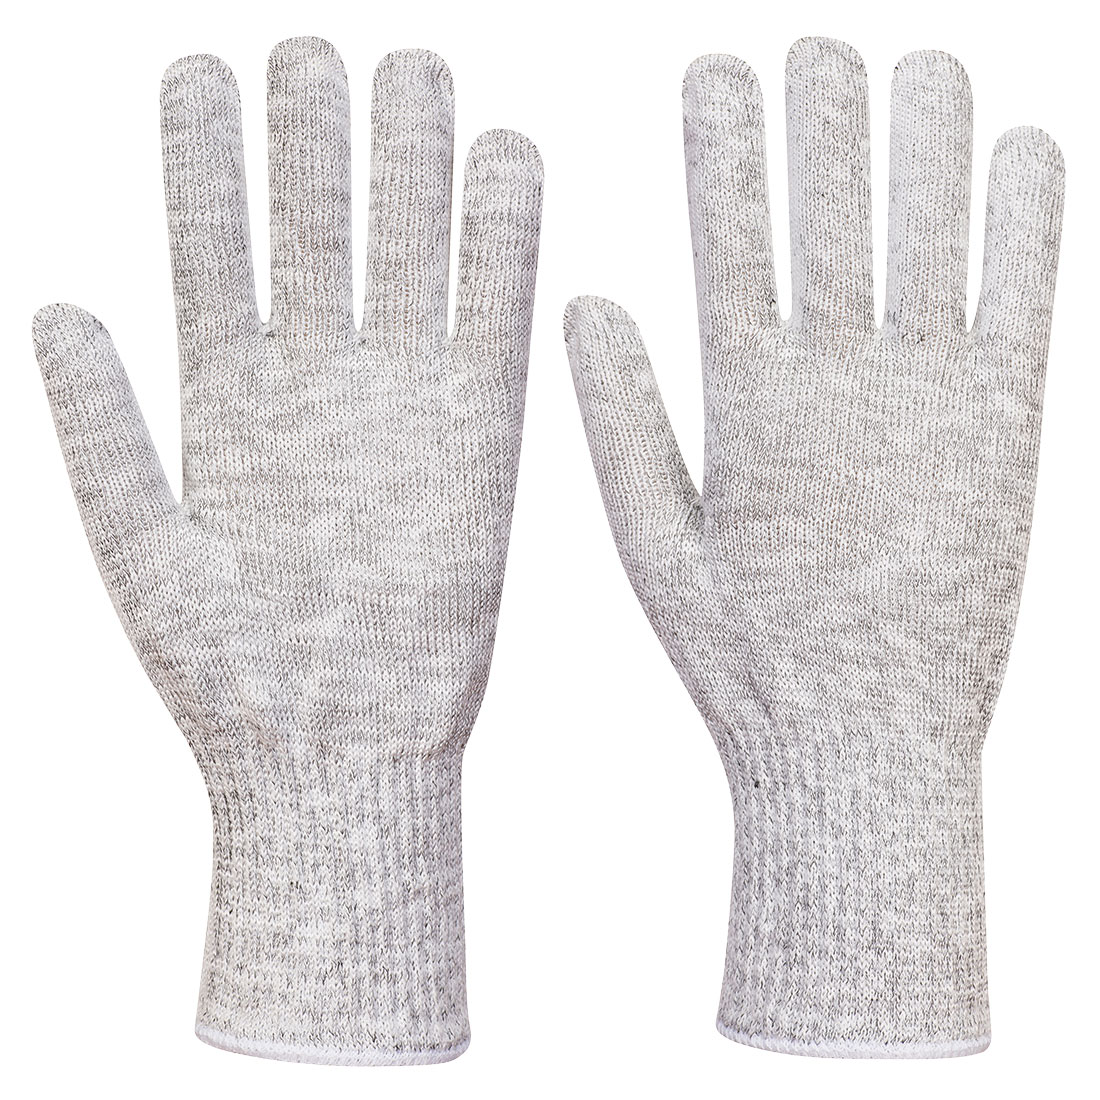 AHR 10 Food Glove Liner - Grey